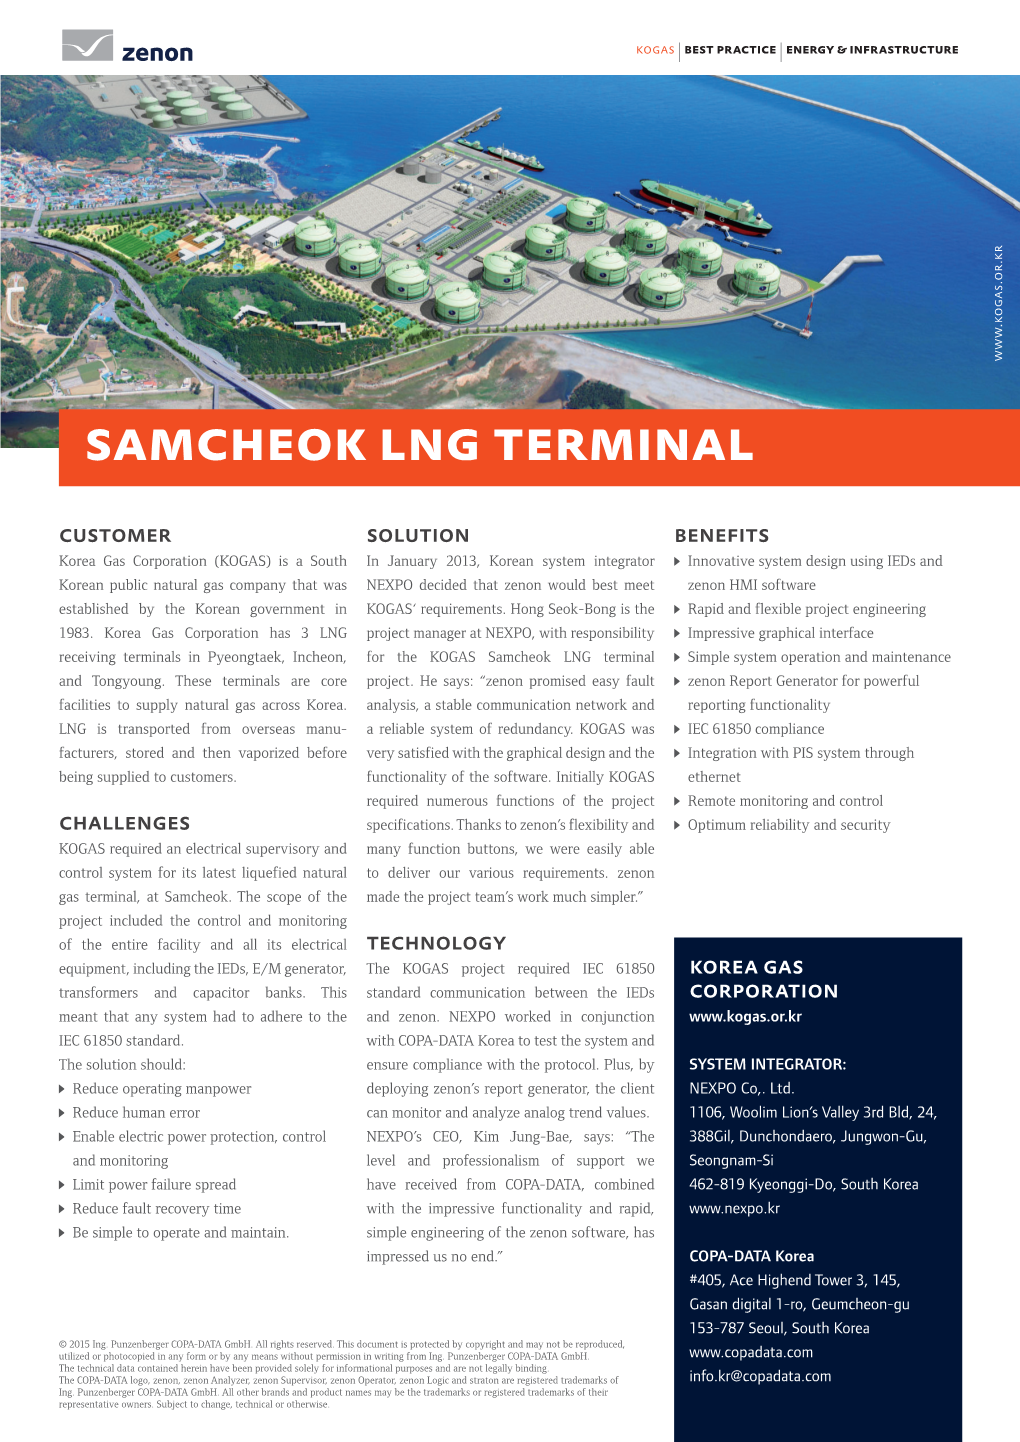 Samcheok LNG Terminal